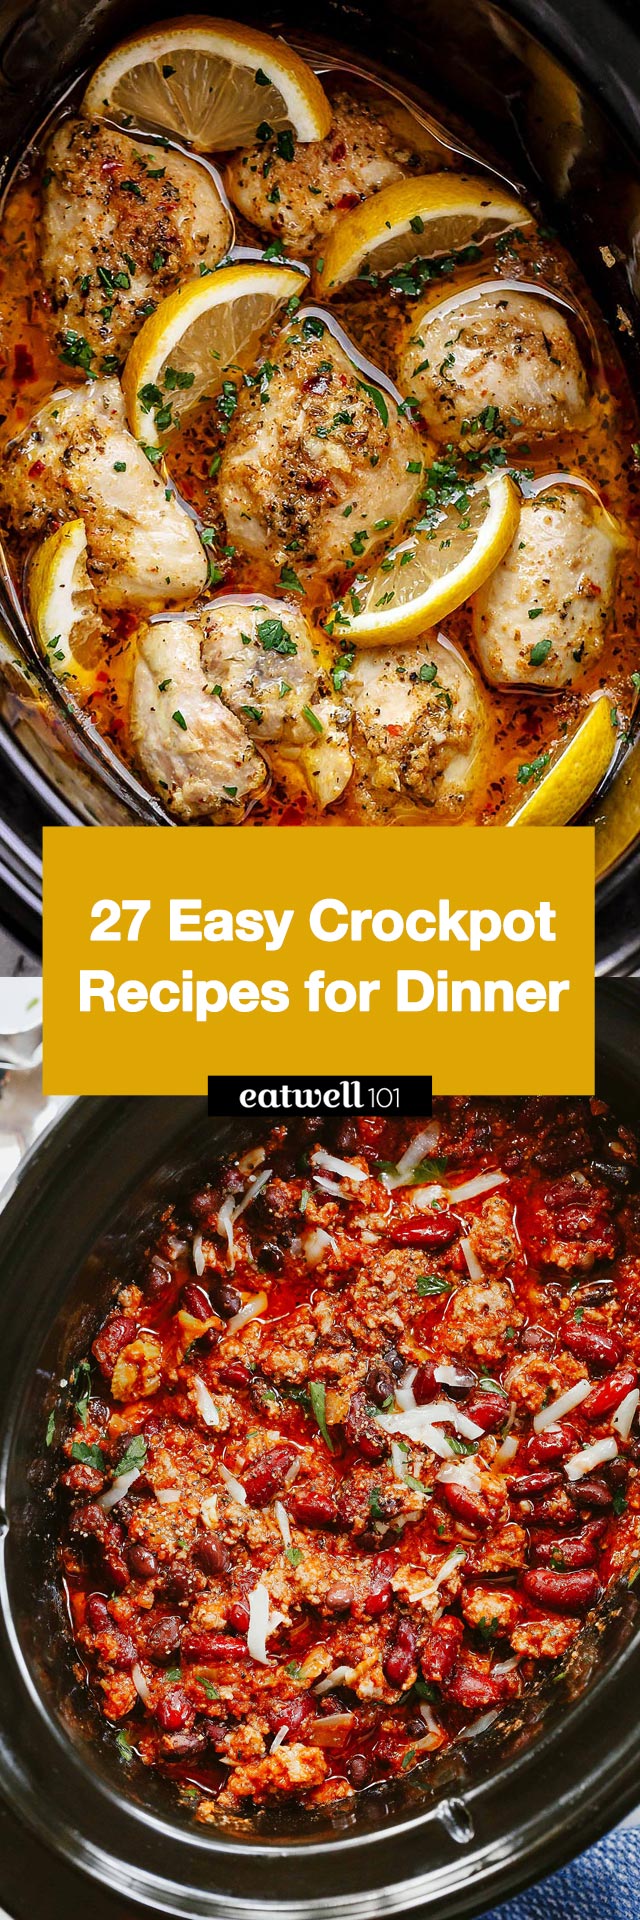 https://www.eatwell101.com/wp-content/uploads/2023/04/Crockpot-Recipes-for-Dinner.jpg